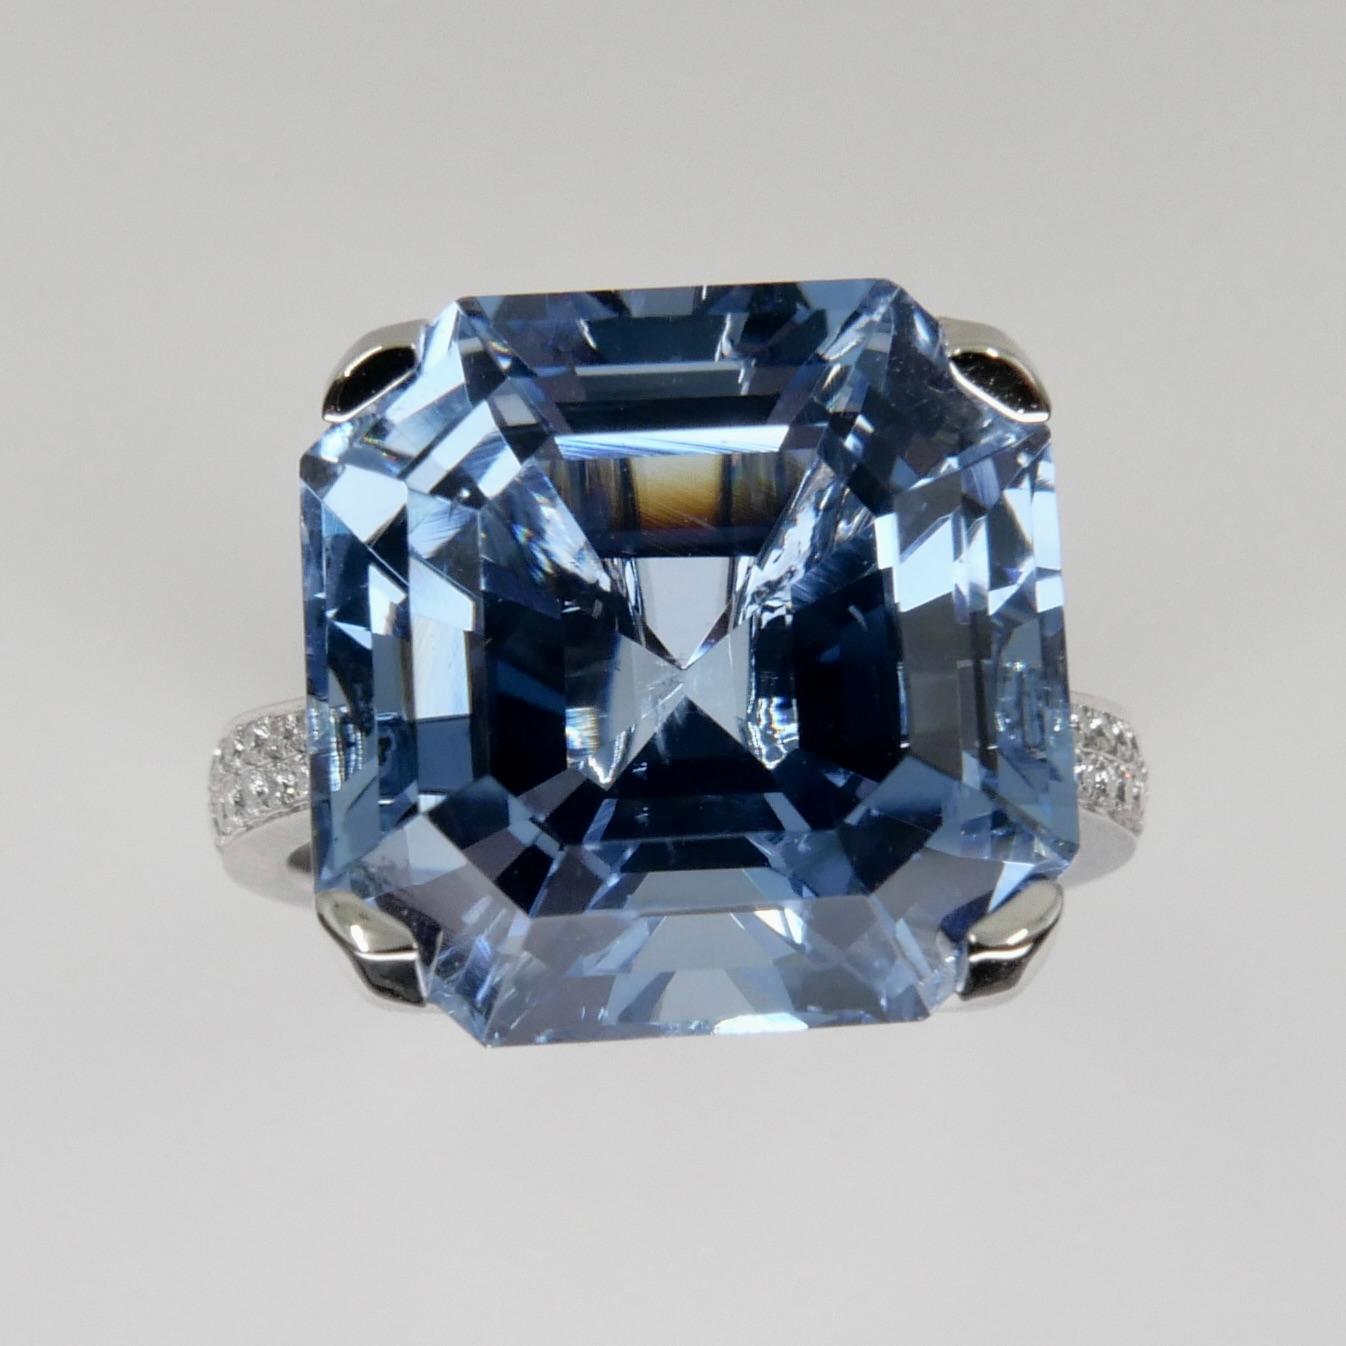 Women's Certified 11.23 Cts Asscher Cut Aquamarine Diamond Ring, True Santa Maria Color